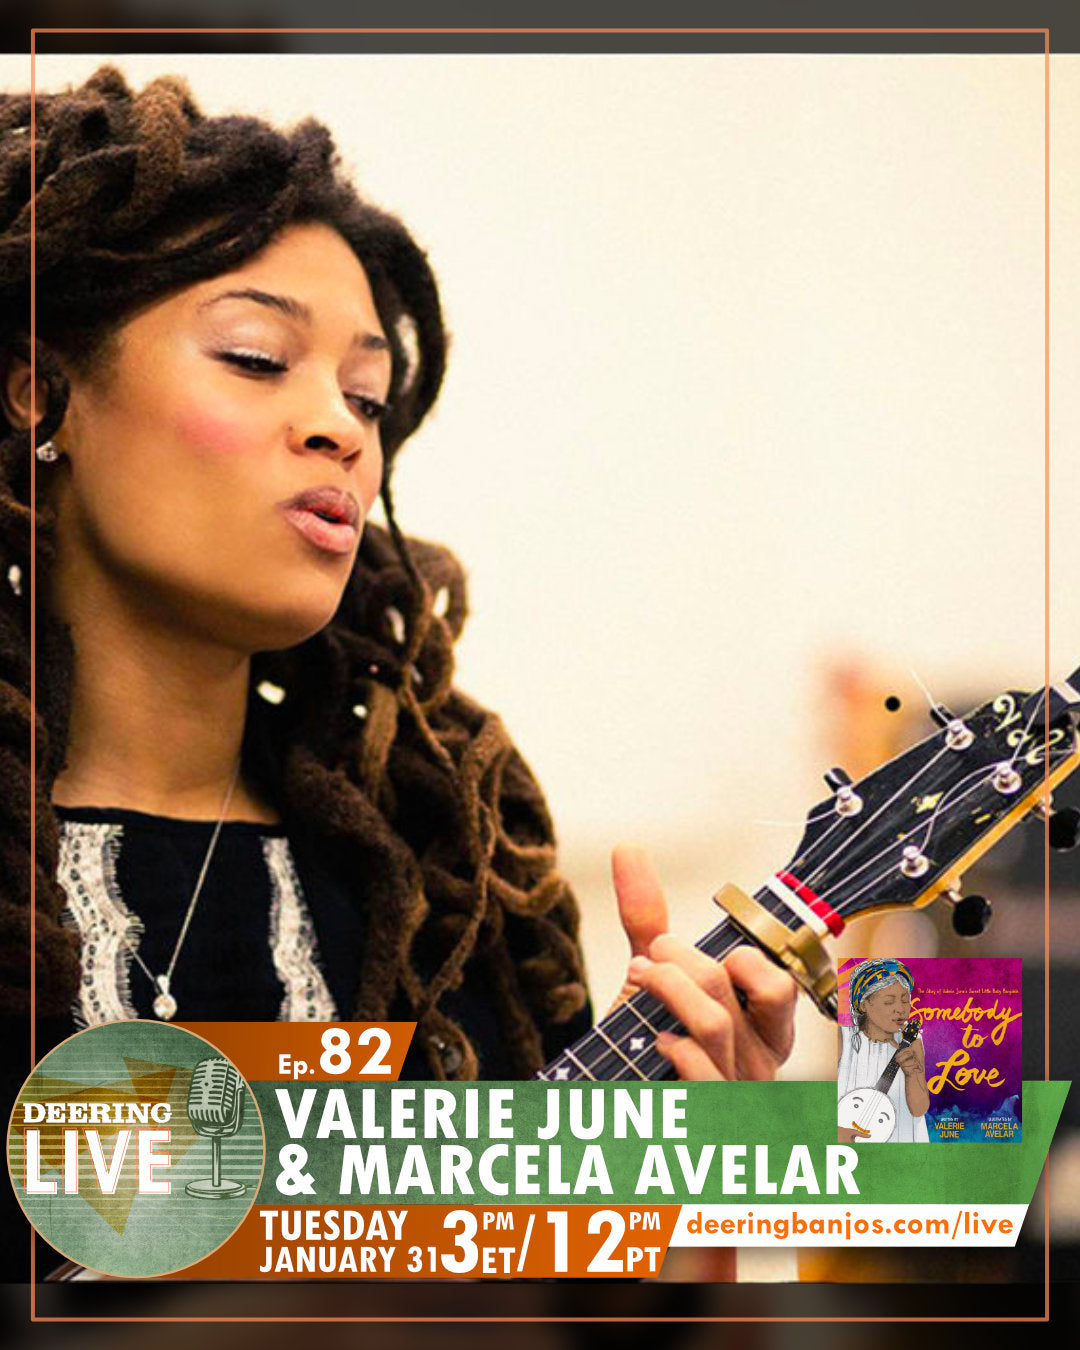 Valerie June on Deering Live - Somebody To Love